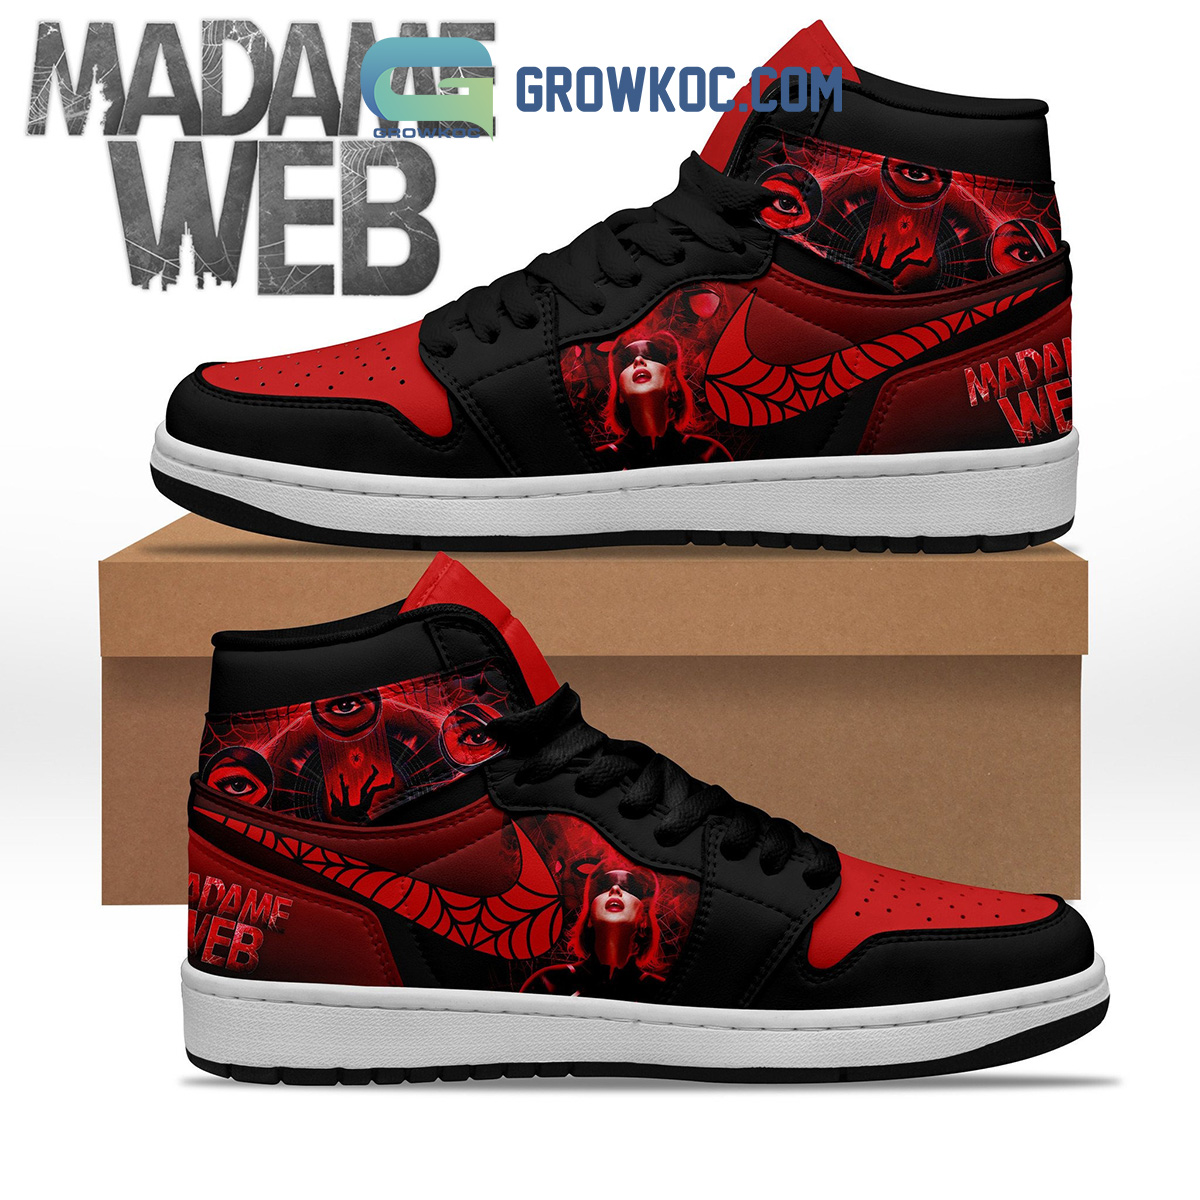 Madame Web Marvel Fan Air Jordan 1 Shoes - Growkoc